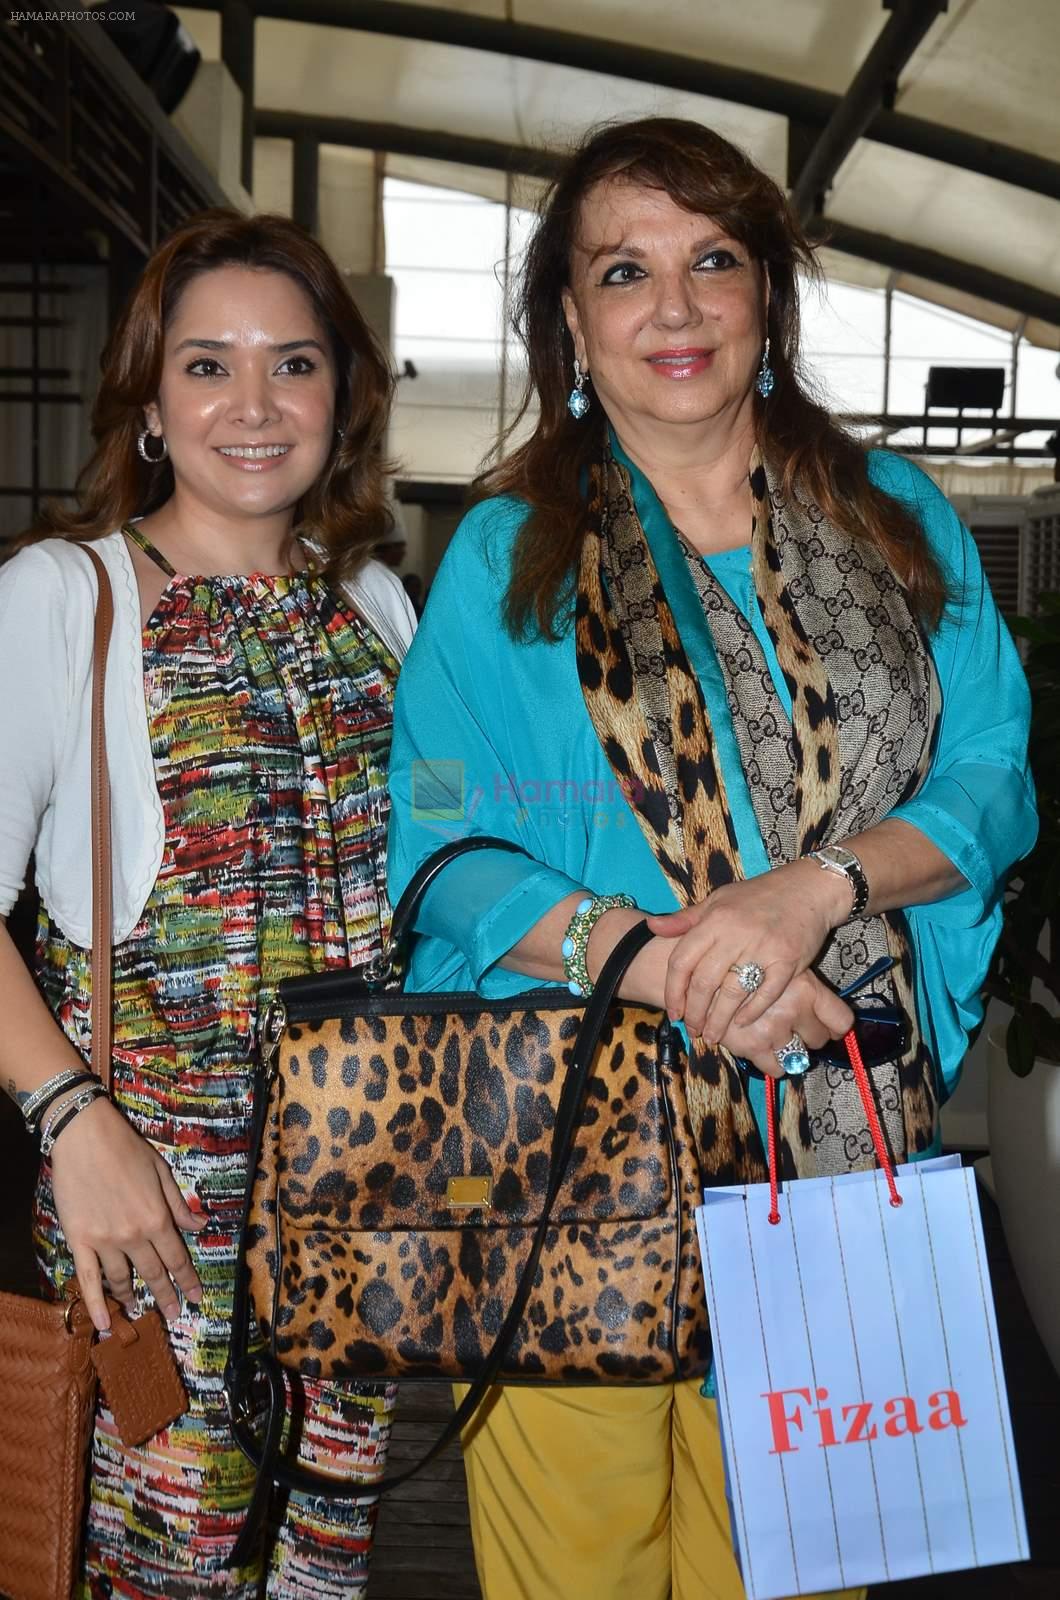 Zarine Khan attend brunch in Mumbai on 8th July 2015